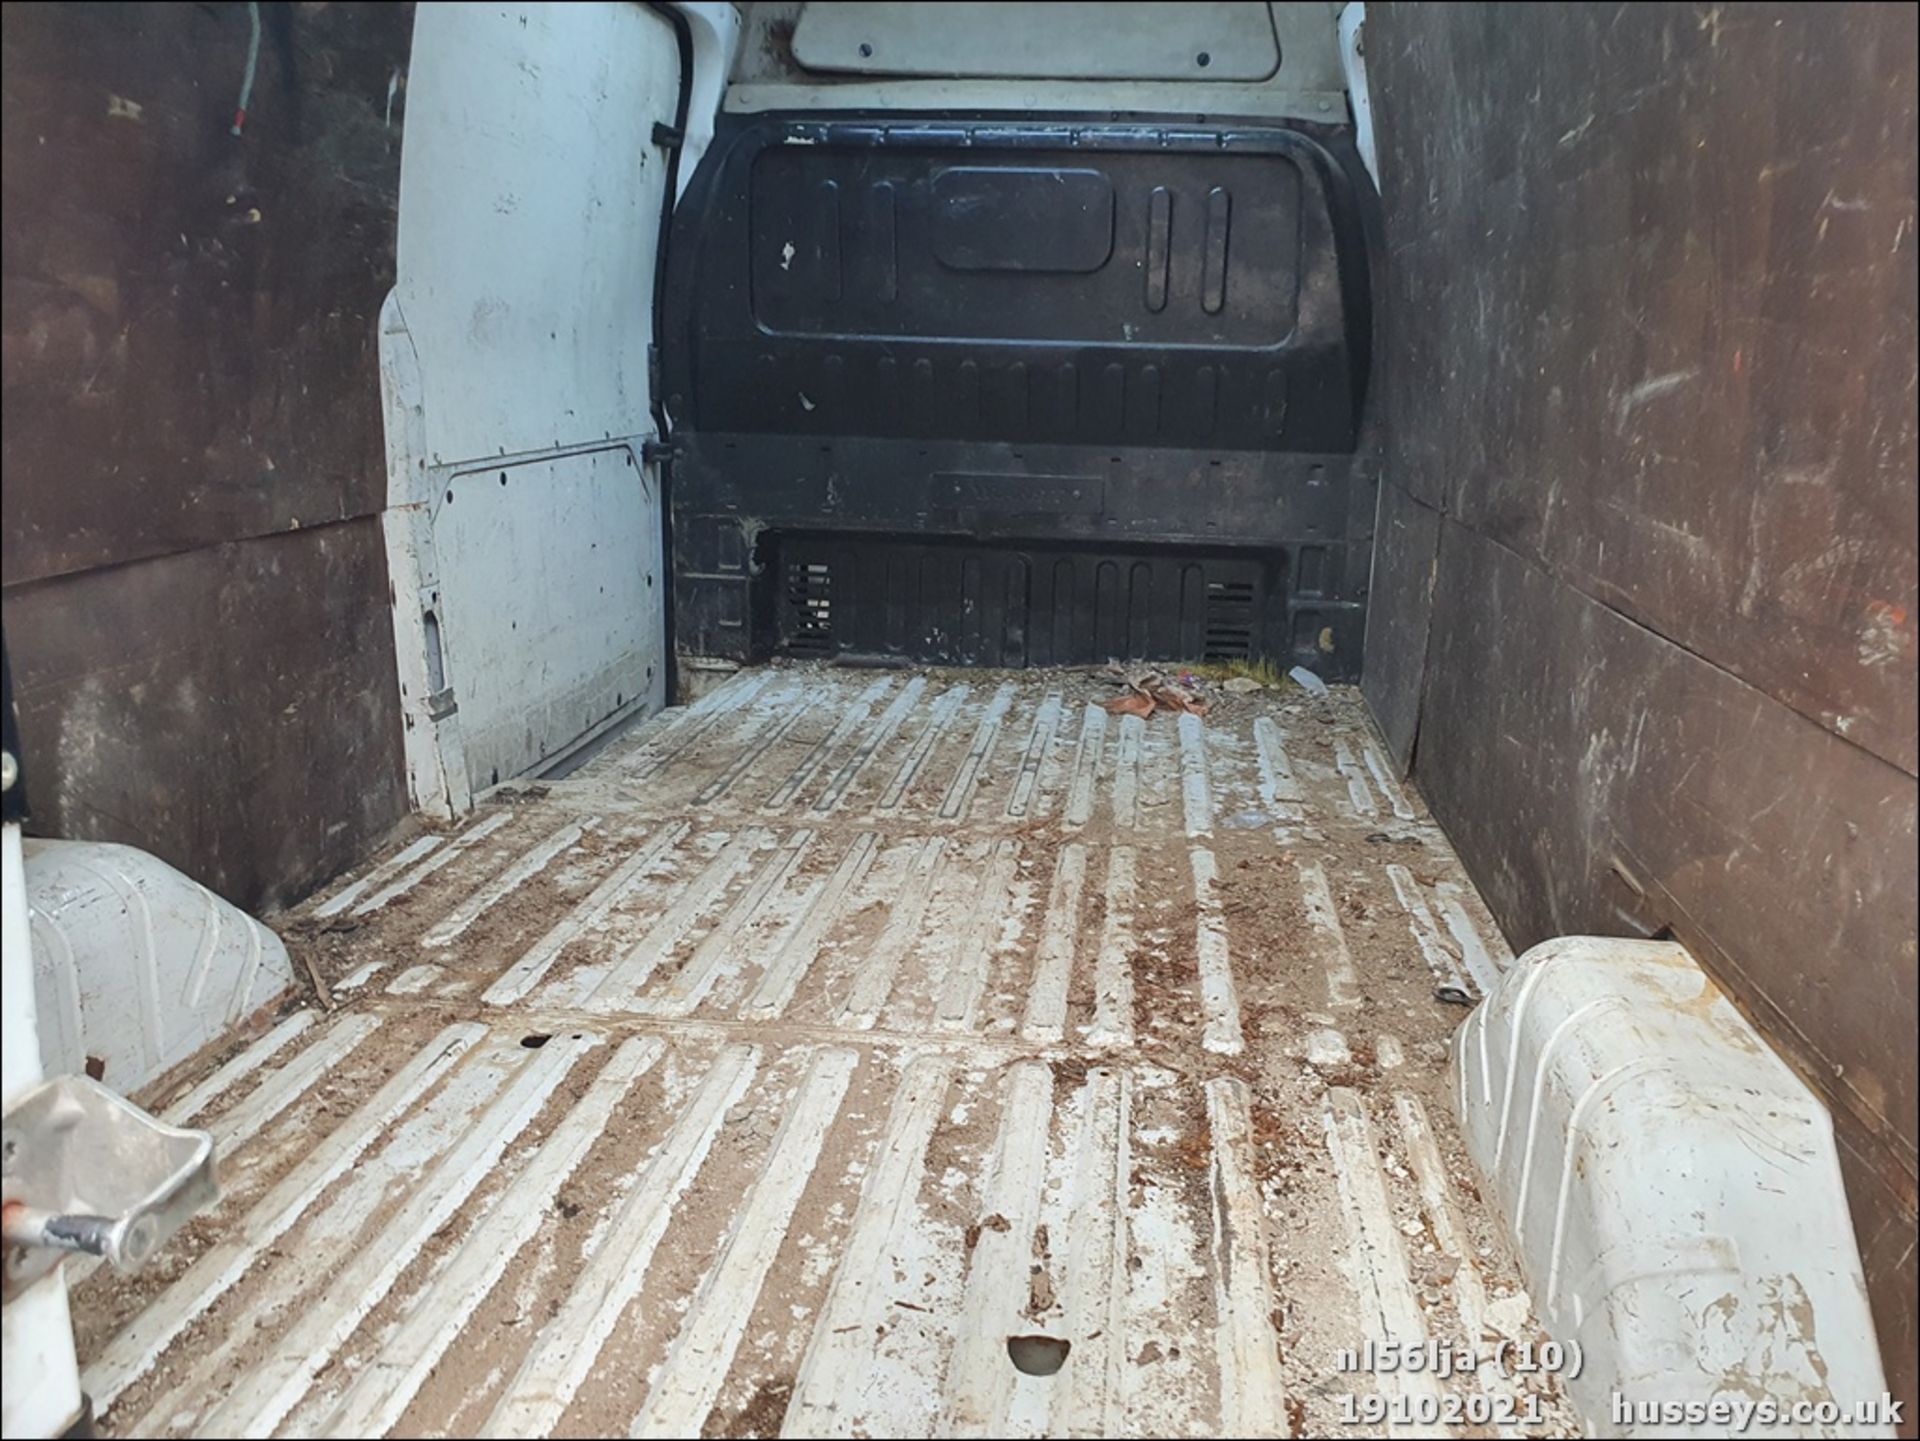 06/56 FORD TRANSIT 100 T350L RWD - 2402cc Van (White, 170k) - Image 11 of 11